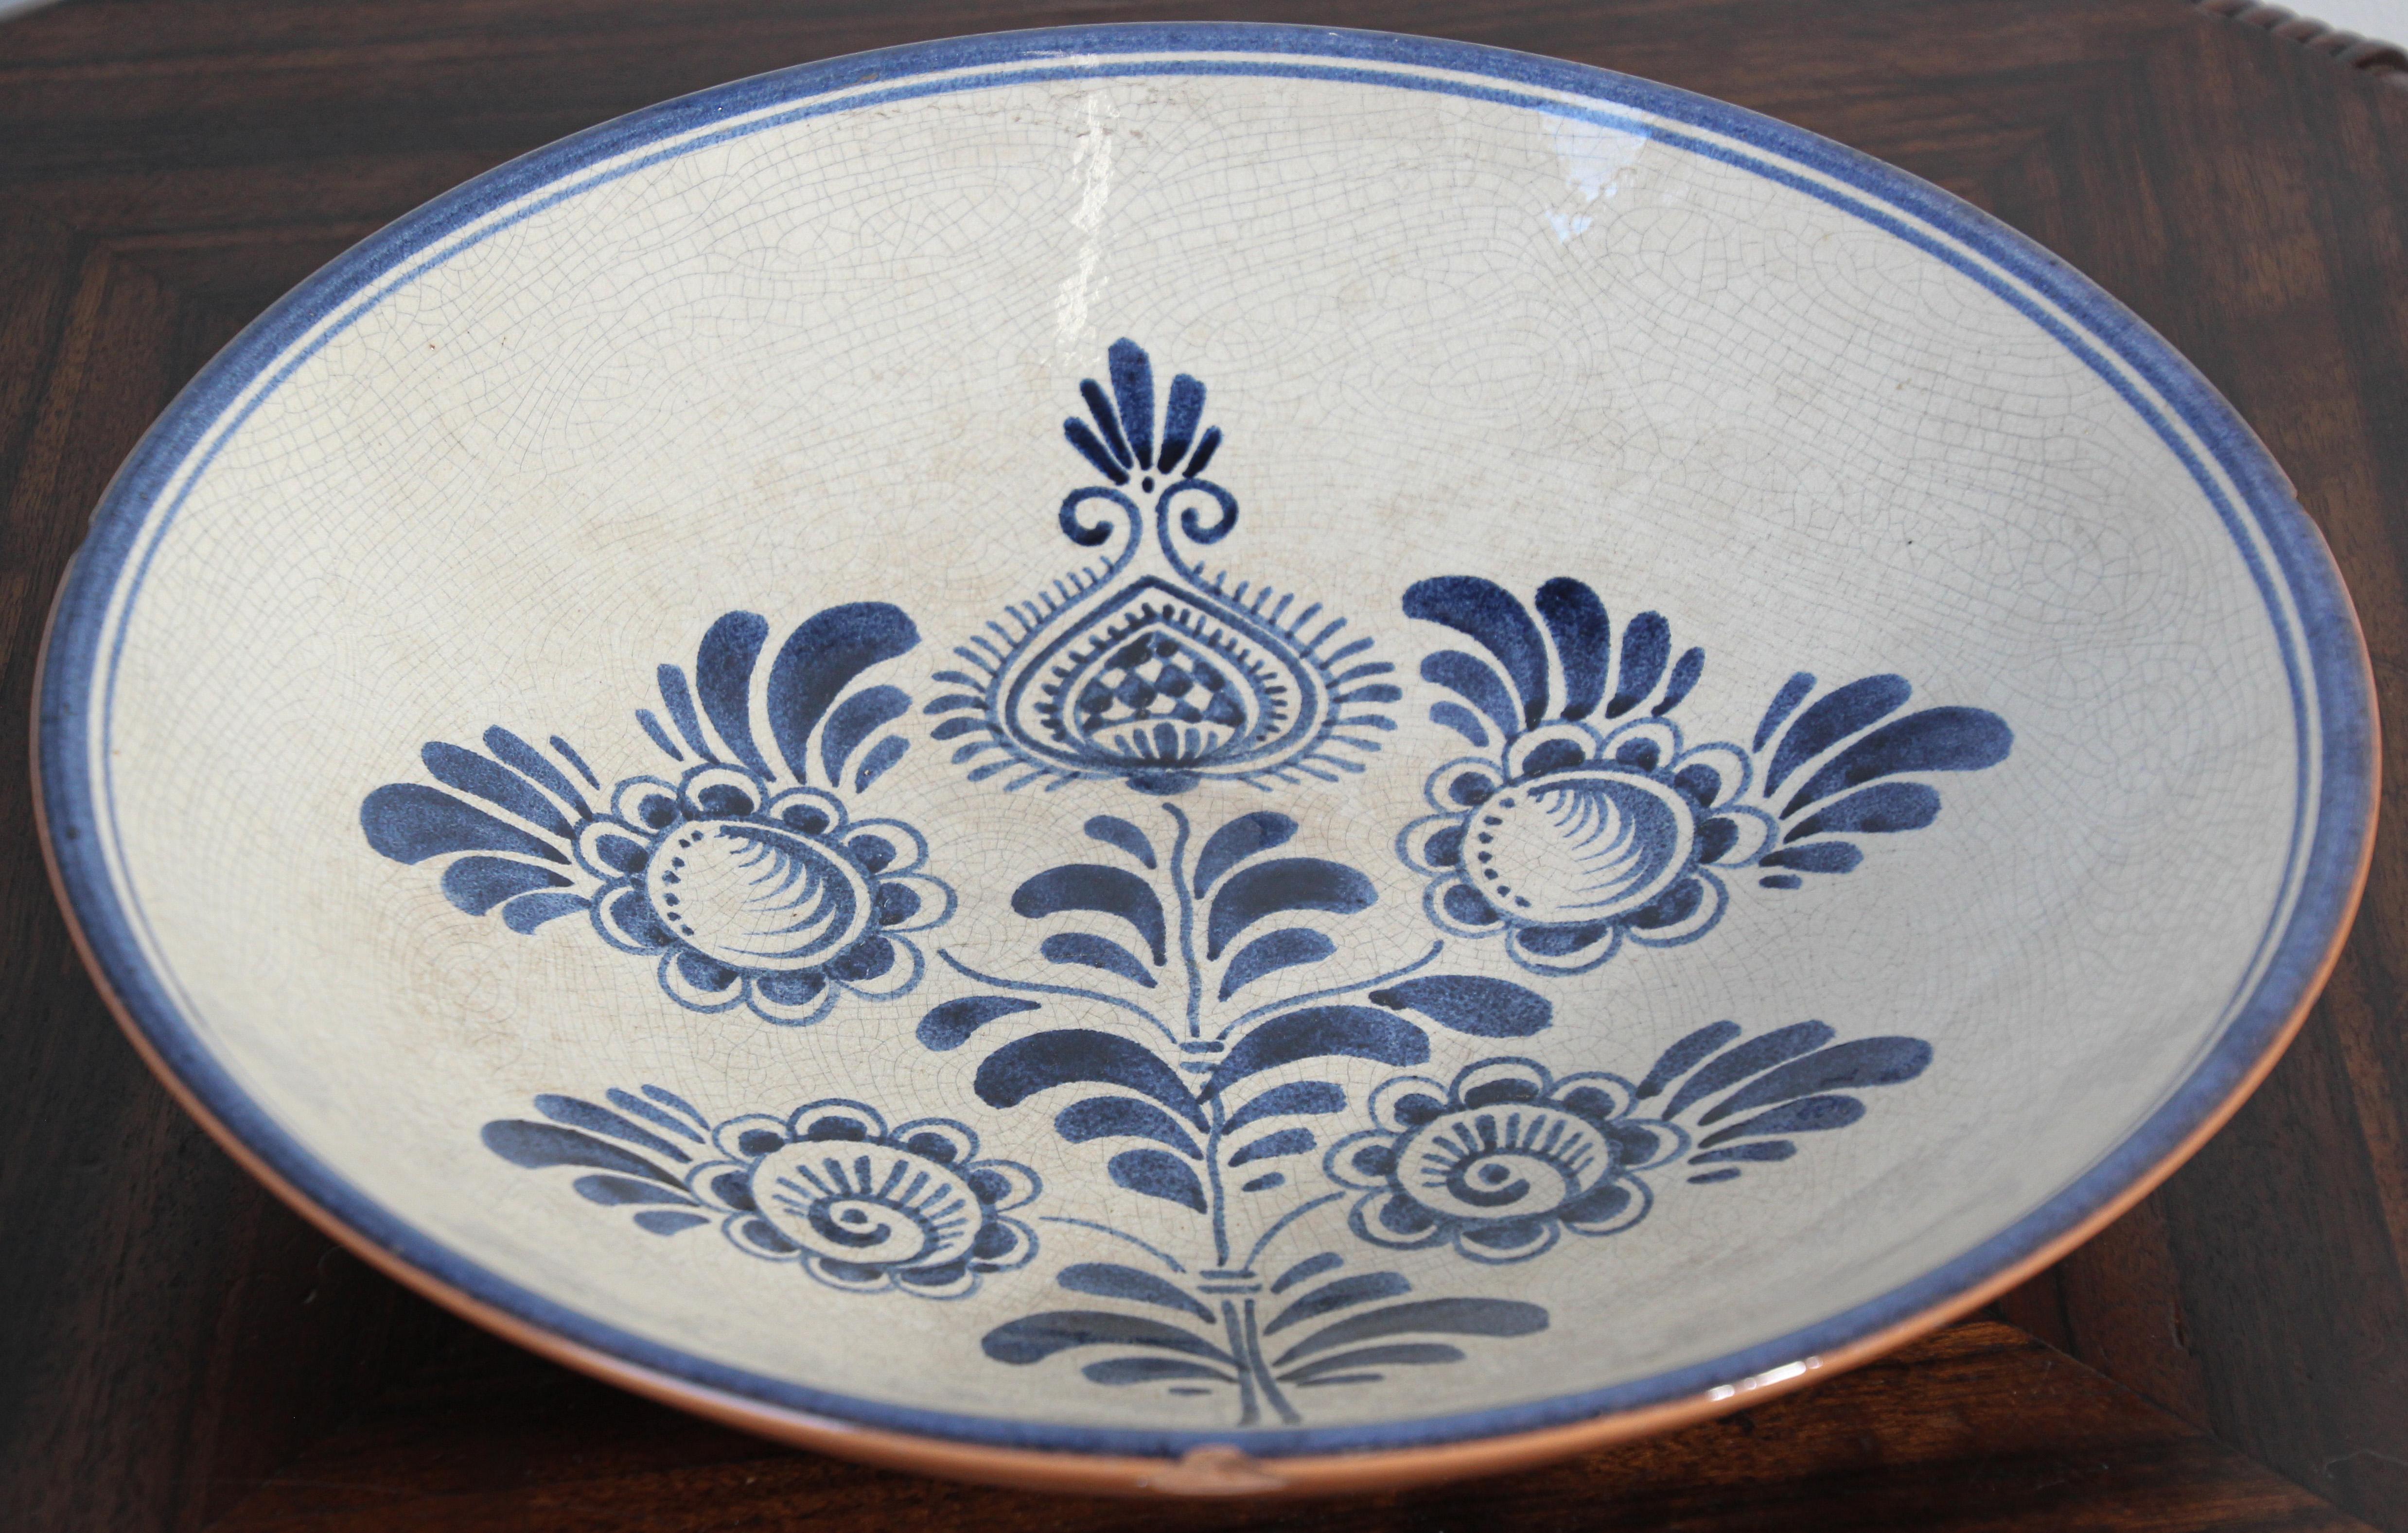 Vintage decorative Moorish bowl blue and white.